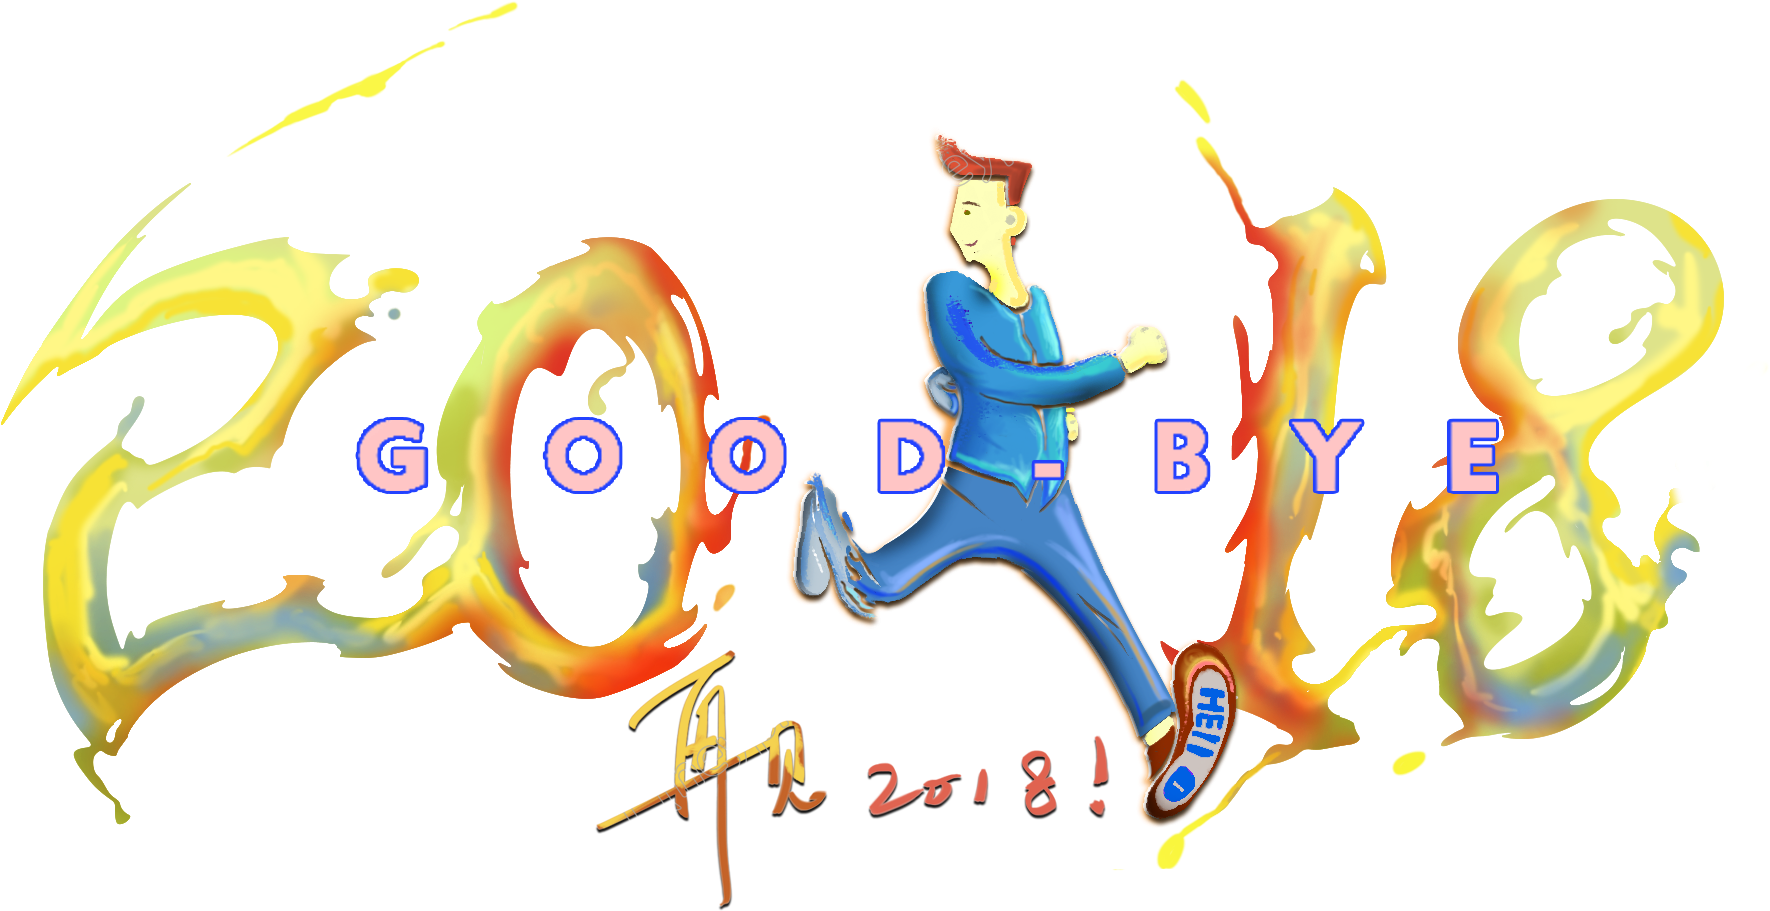 Vibrant Goodbye2018 Illustration PNG image